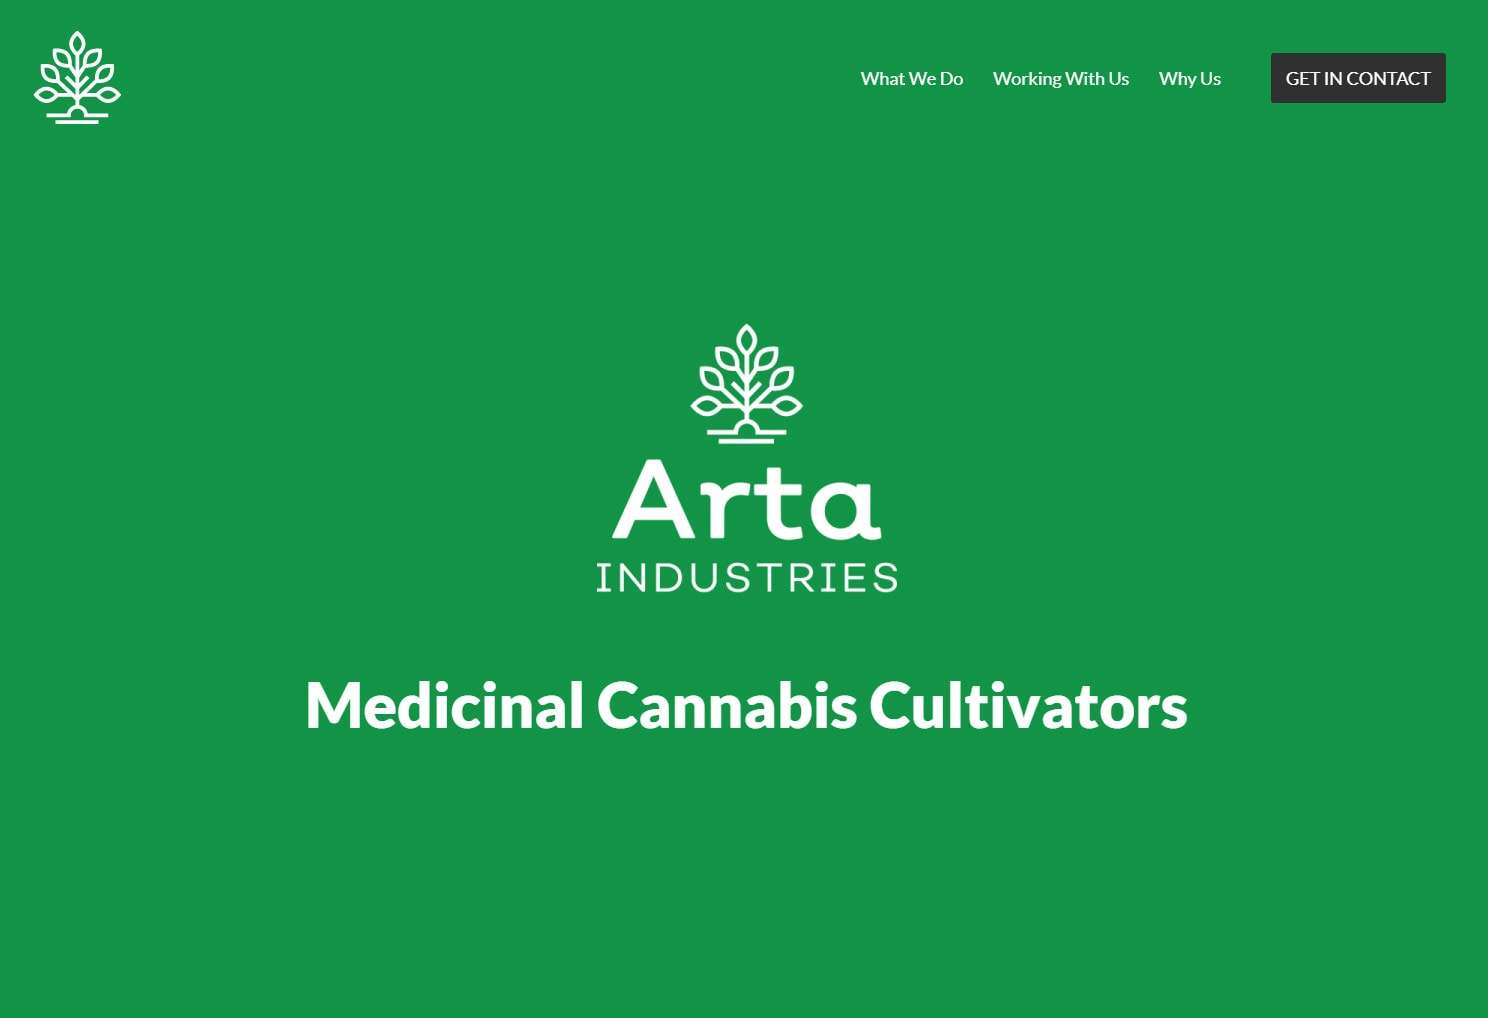 Arta Industries website, design and Wordpress build by Birdhouse Digital